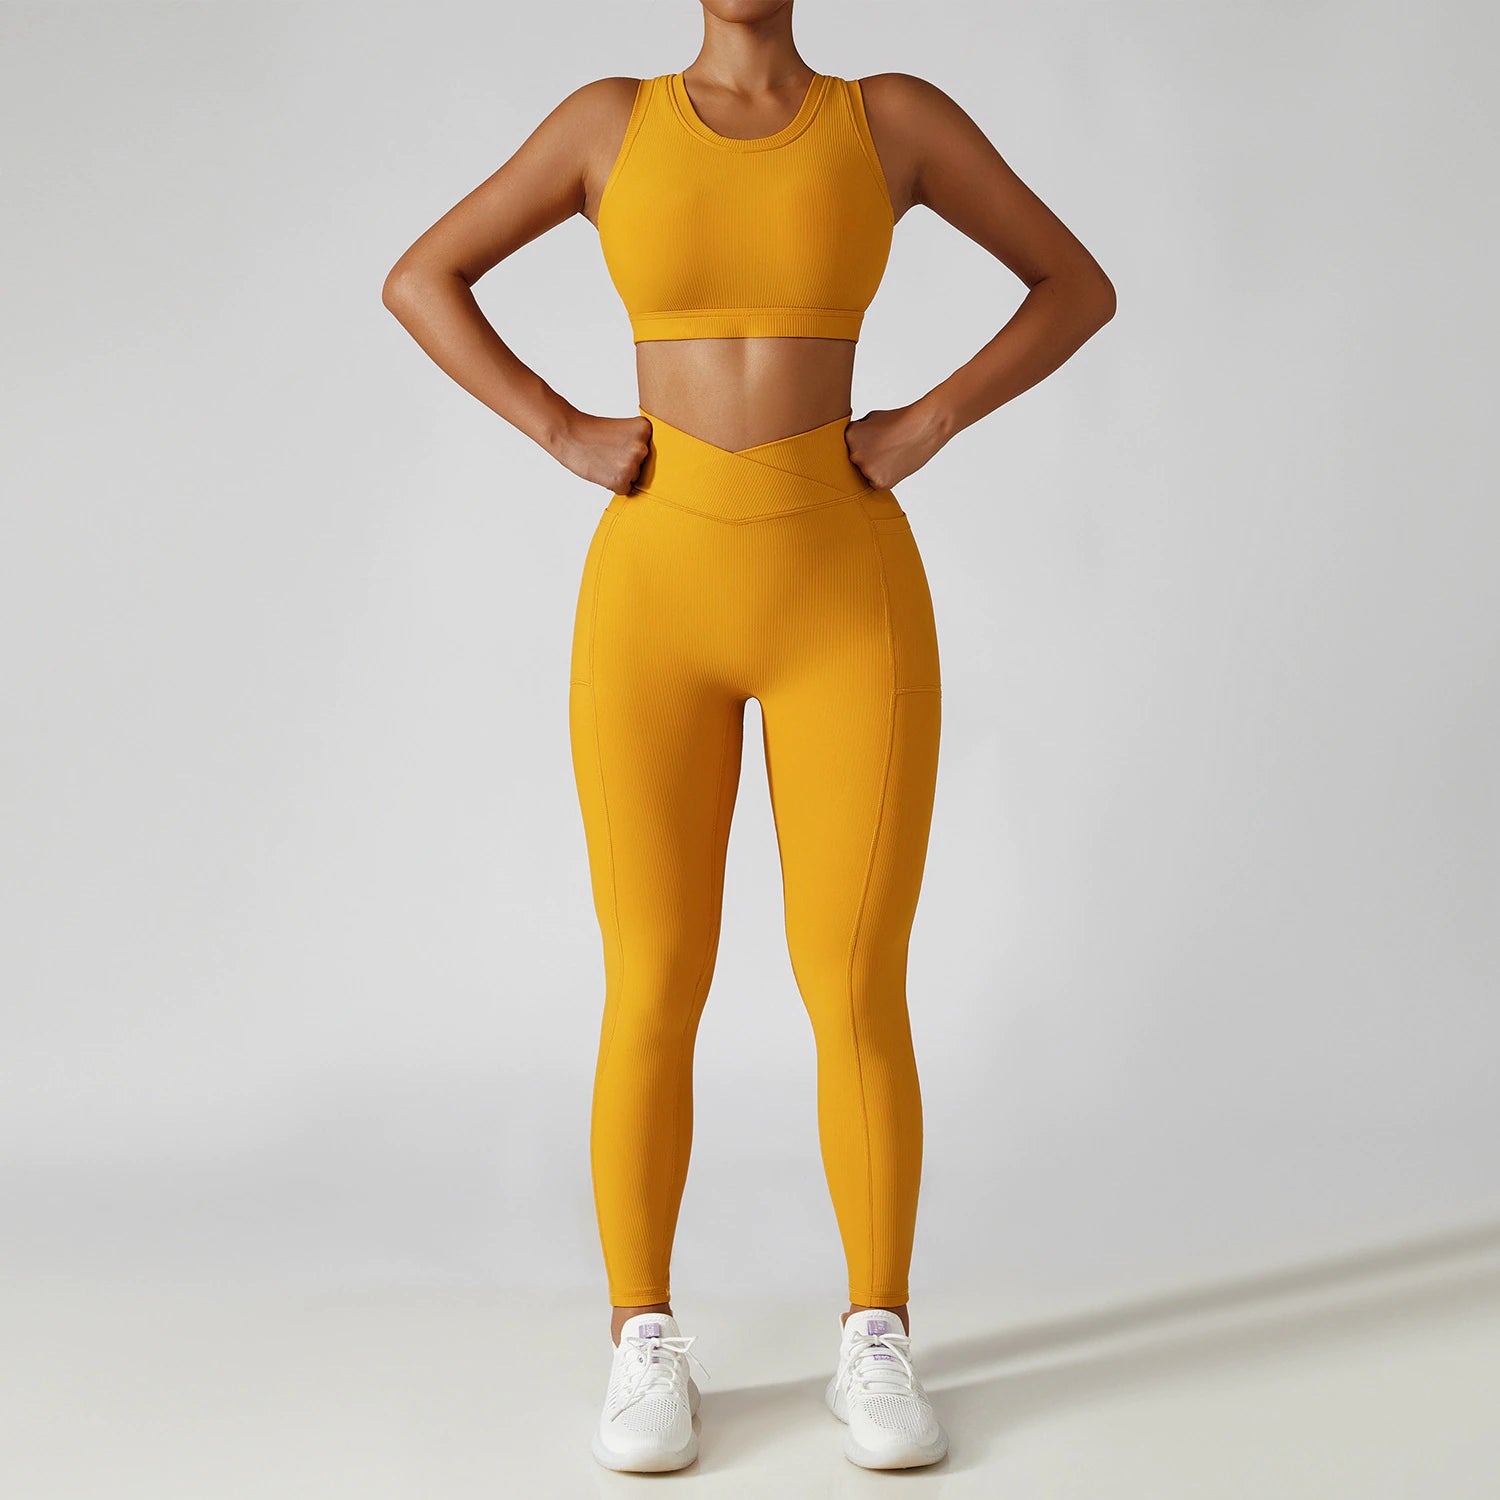 Buy FeelinGirl Women Gym Clothes Athletic Set Seamless Yoga Outfits 2 Piece  Set, Yellowk, Medium at